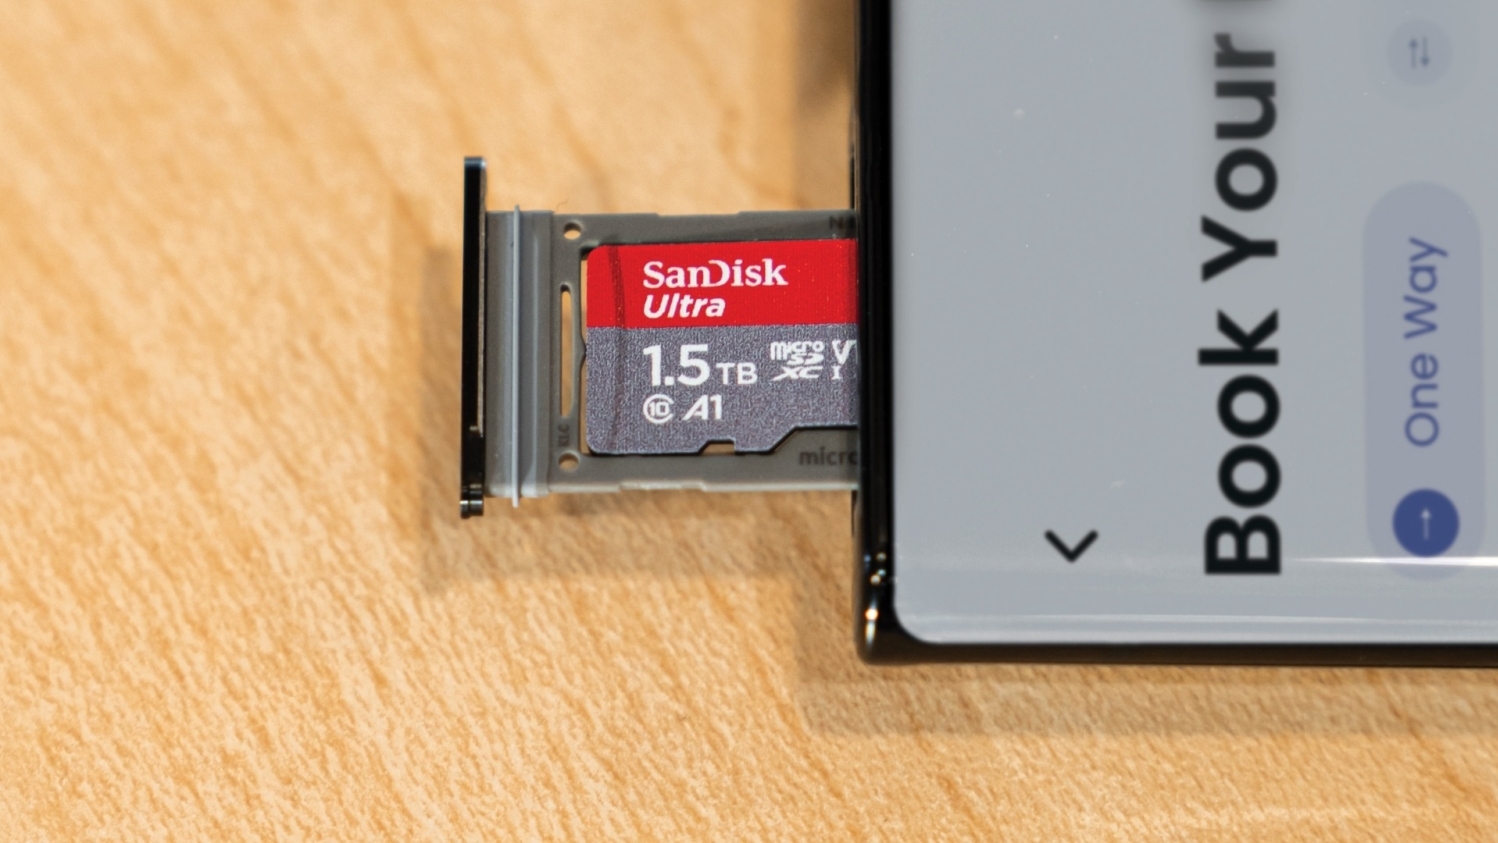 4 Pack 64GB Micro SD Card Ultra Micro SDXC Memory Card High Speed